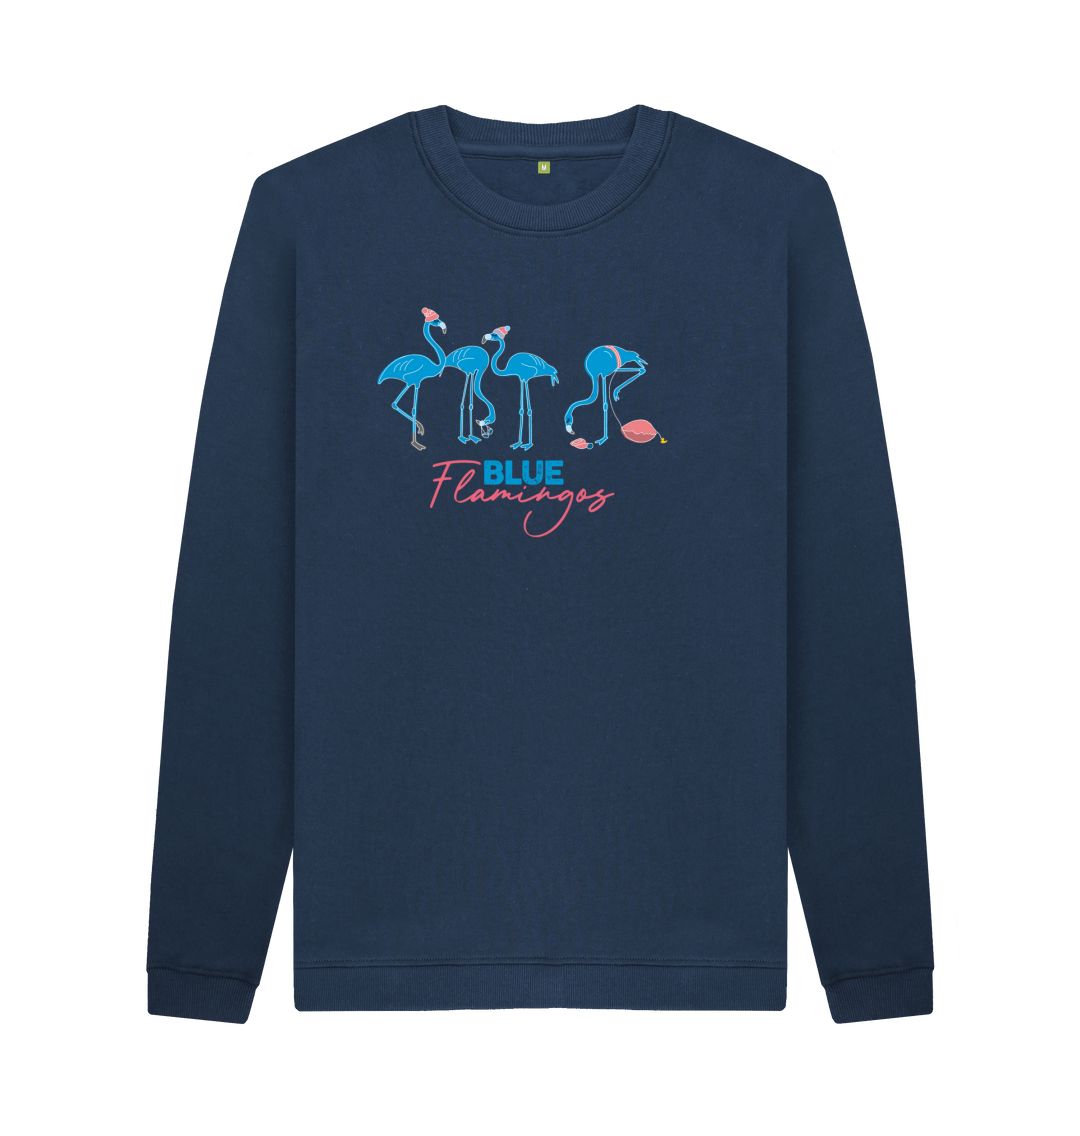 Navy Blue Blue Flamingos sweatshirt - unisex fit